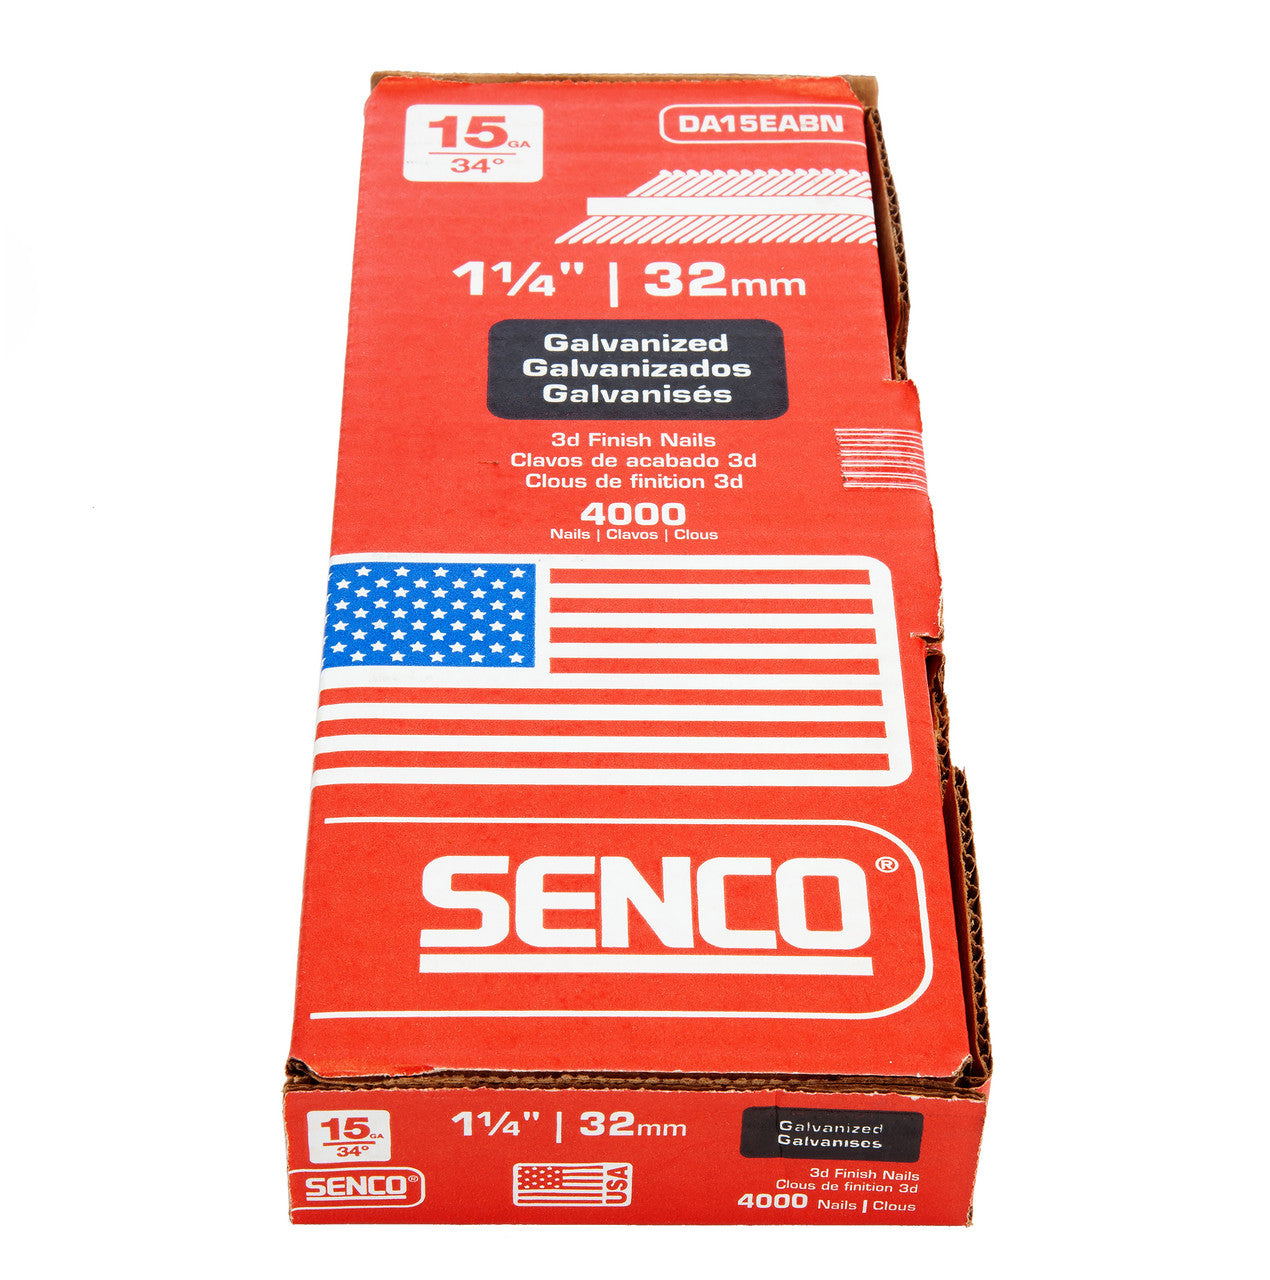 Senco DA15EABN Galvanised Collated DA Finish Nails 15 Gauge 1.8mm x 32mm (4000 in Box)